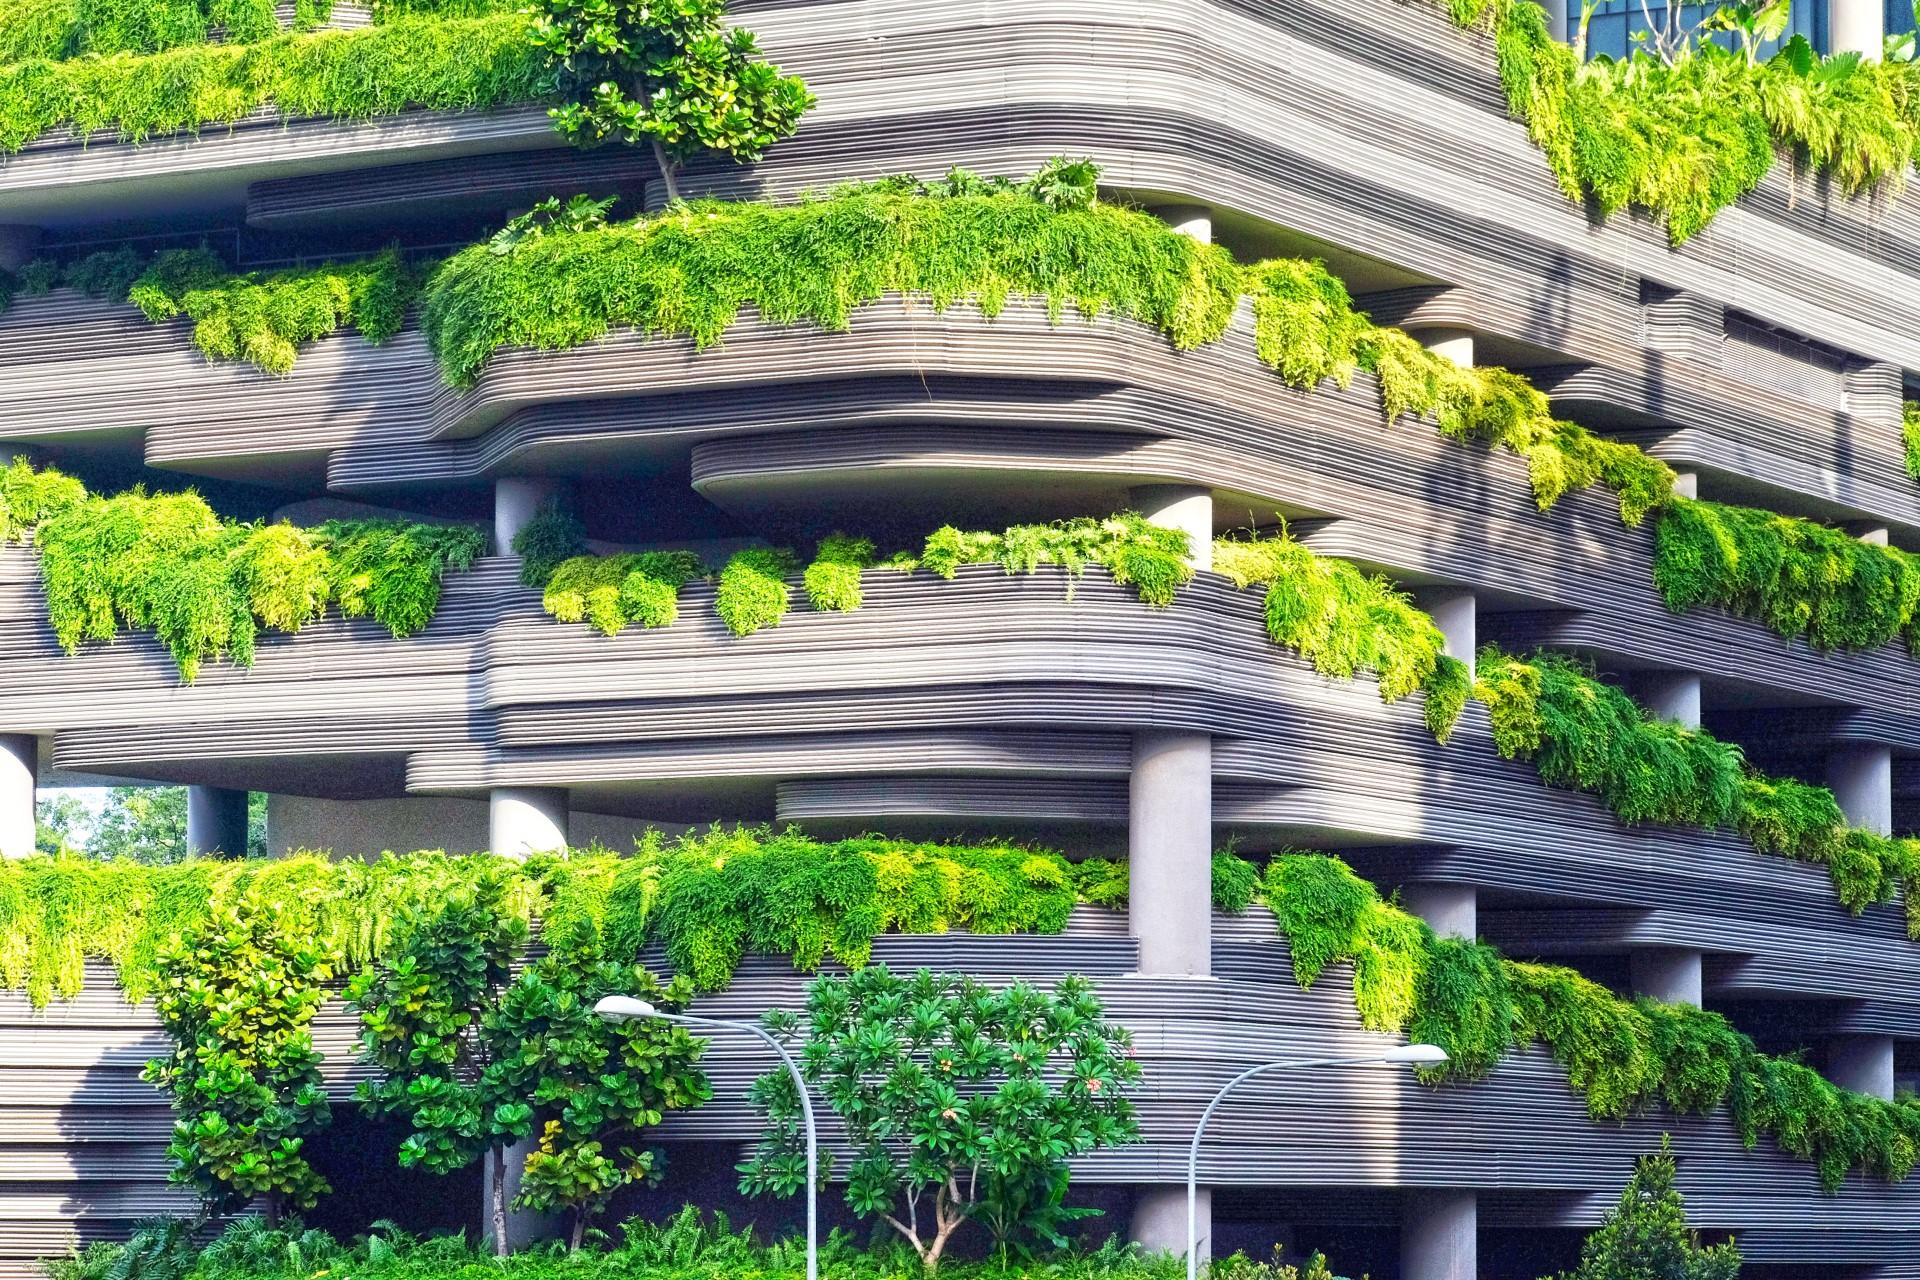 Greenery on building - Environmentally friendly